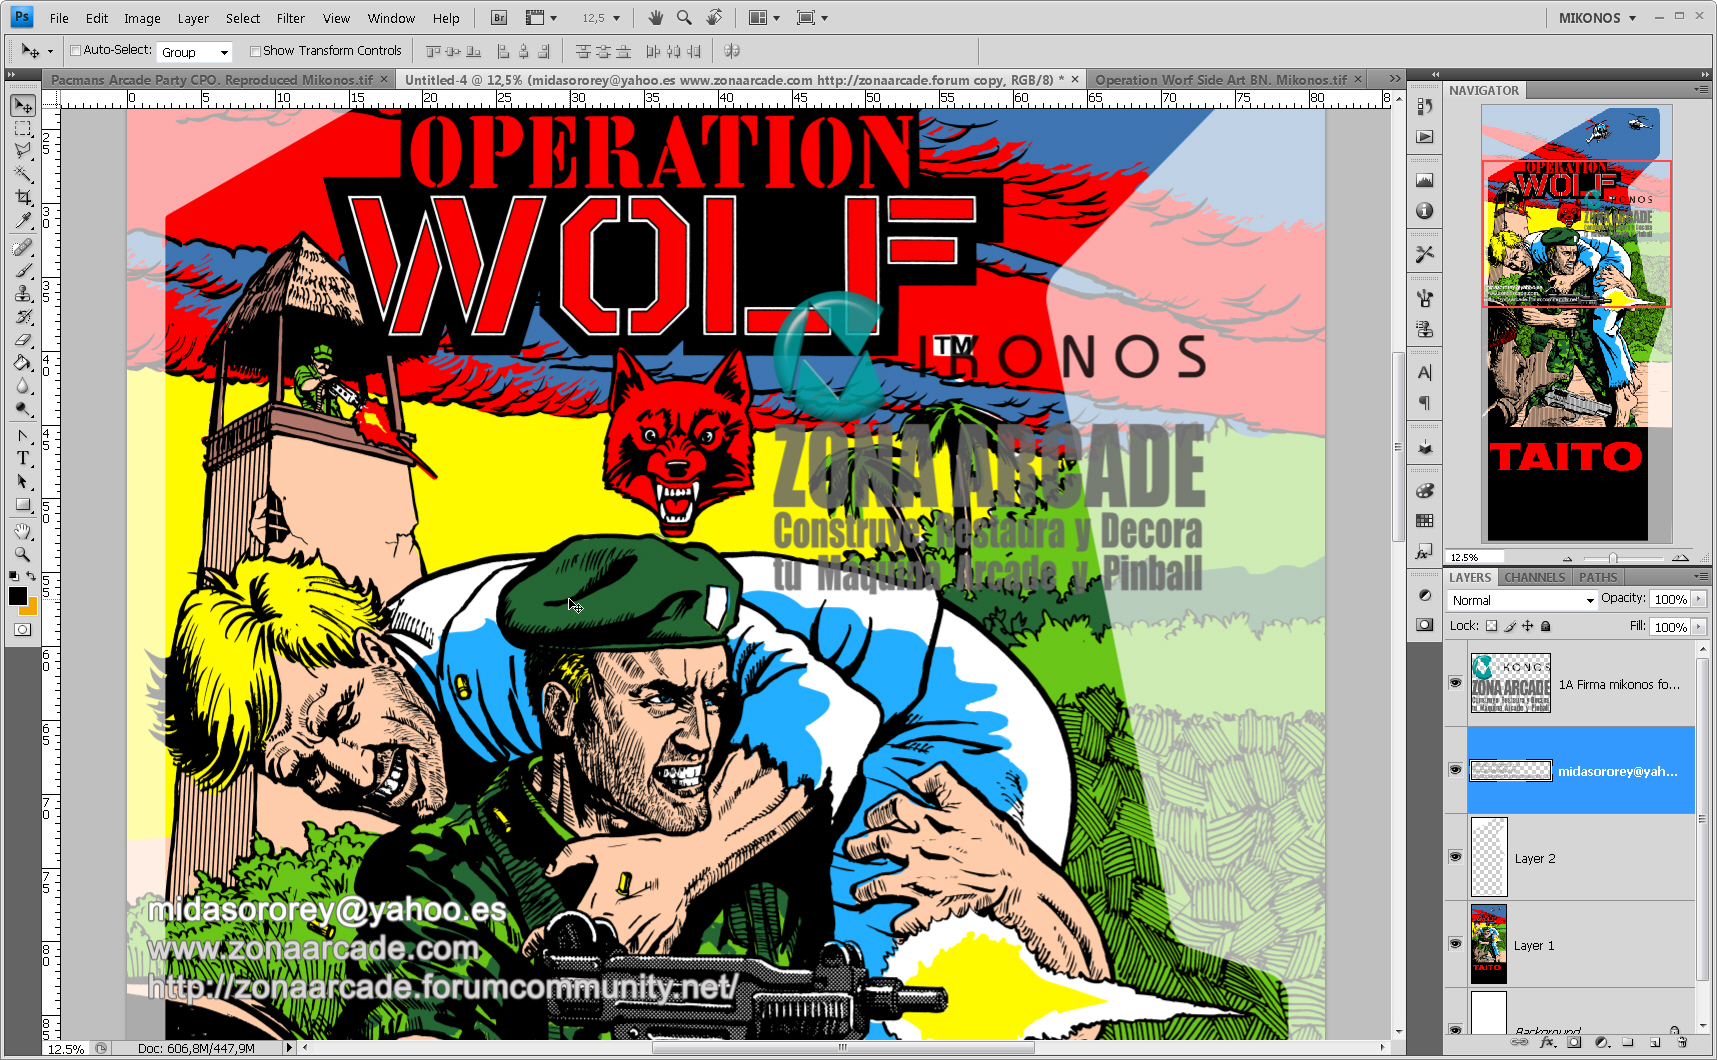 Operation-Wolf-Left-Side-Art-Restored-Mikonos2